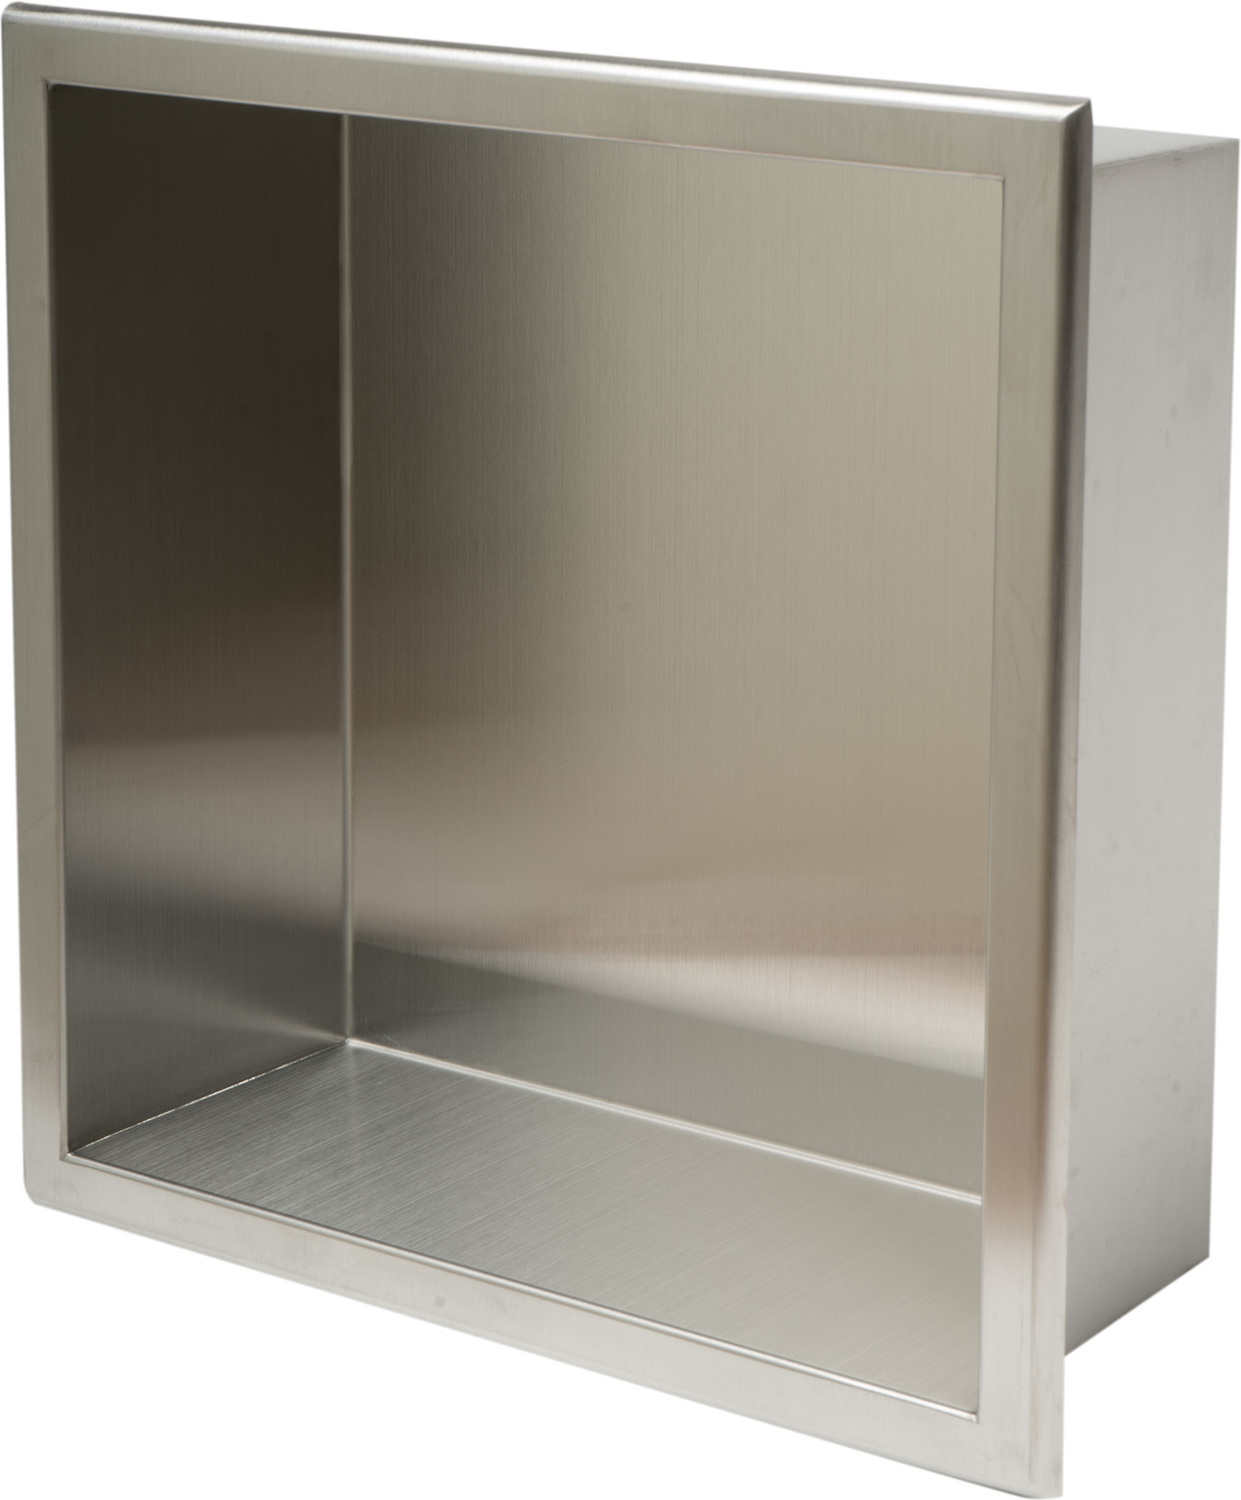 shower stall shelf ideas Alfi Shower Niche Brushed Stainless Steel Modern